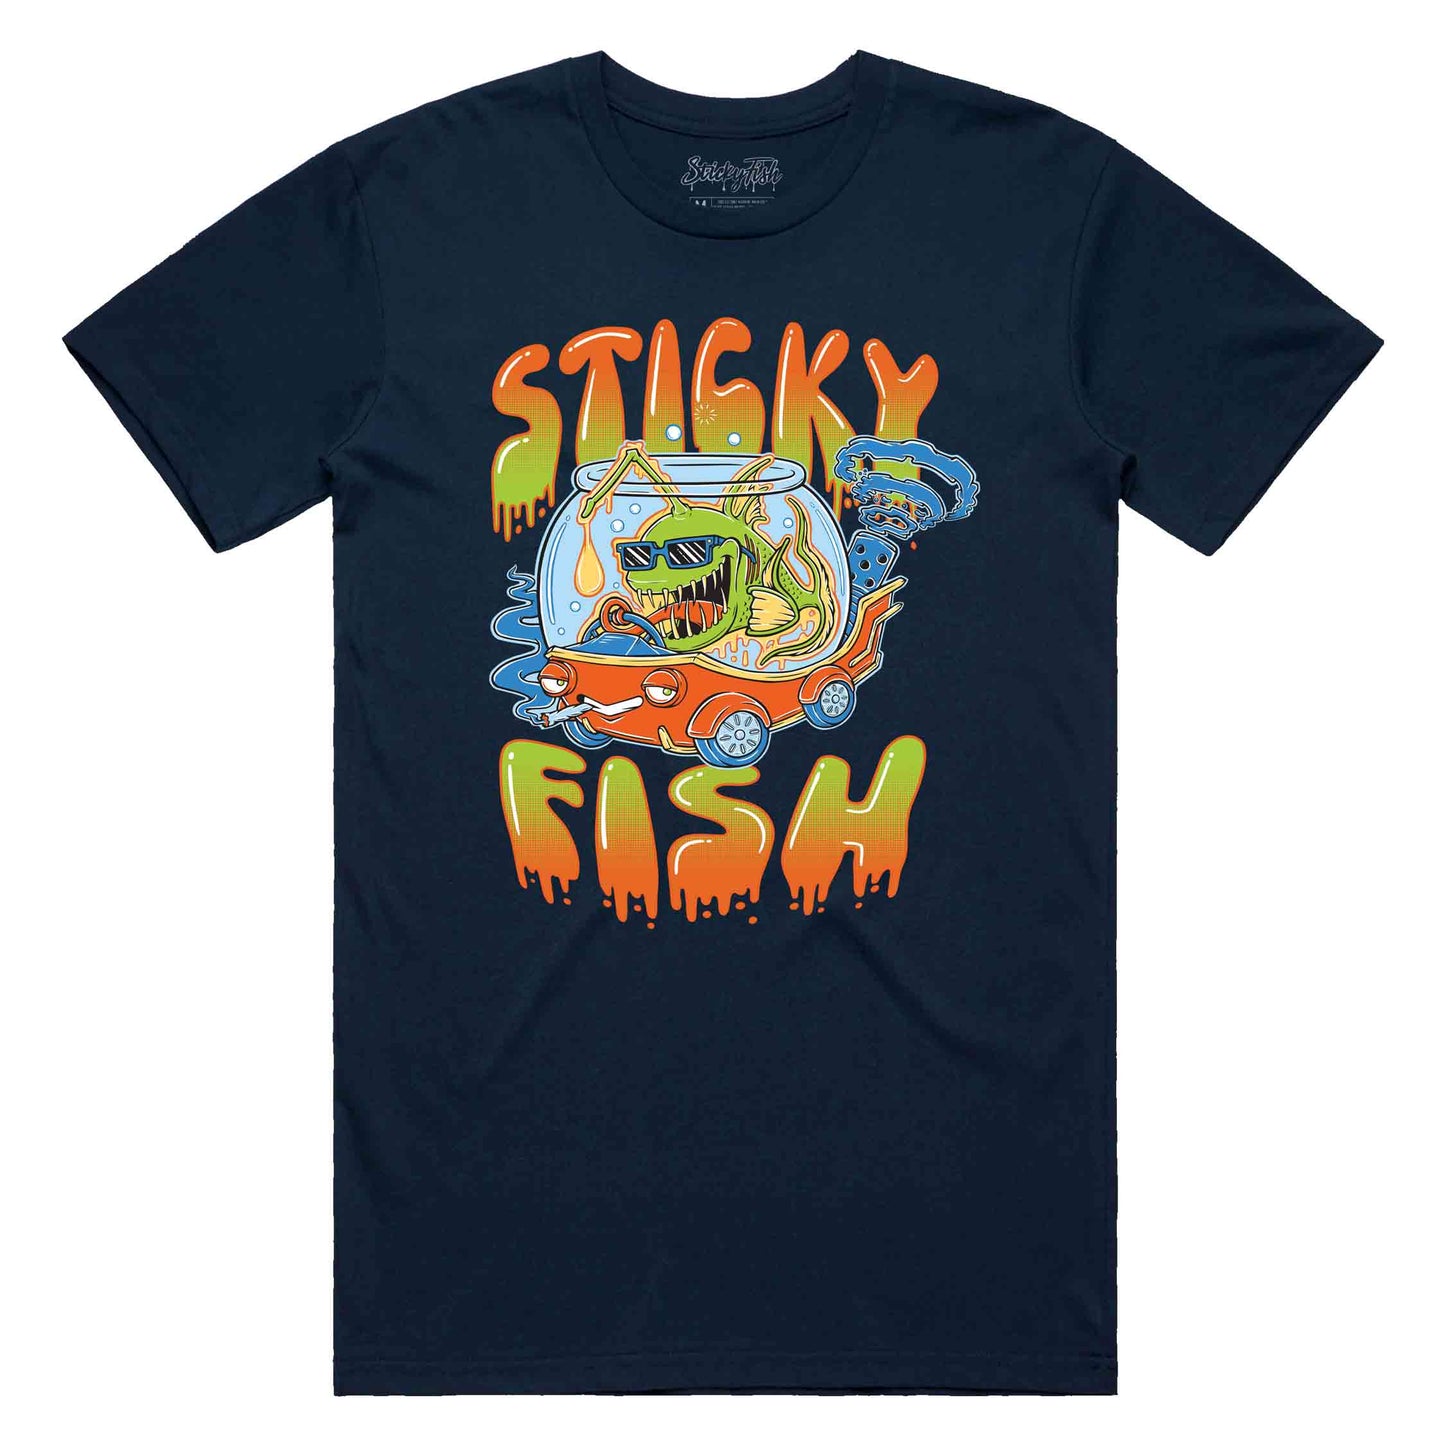 Sticky Fish - Fish Bowl - T-Shirt (Midnight Navy)